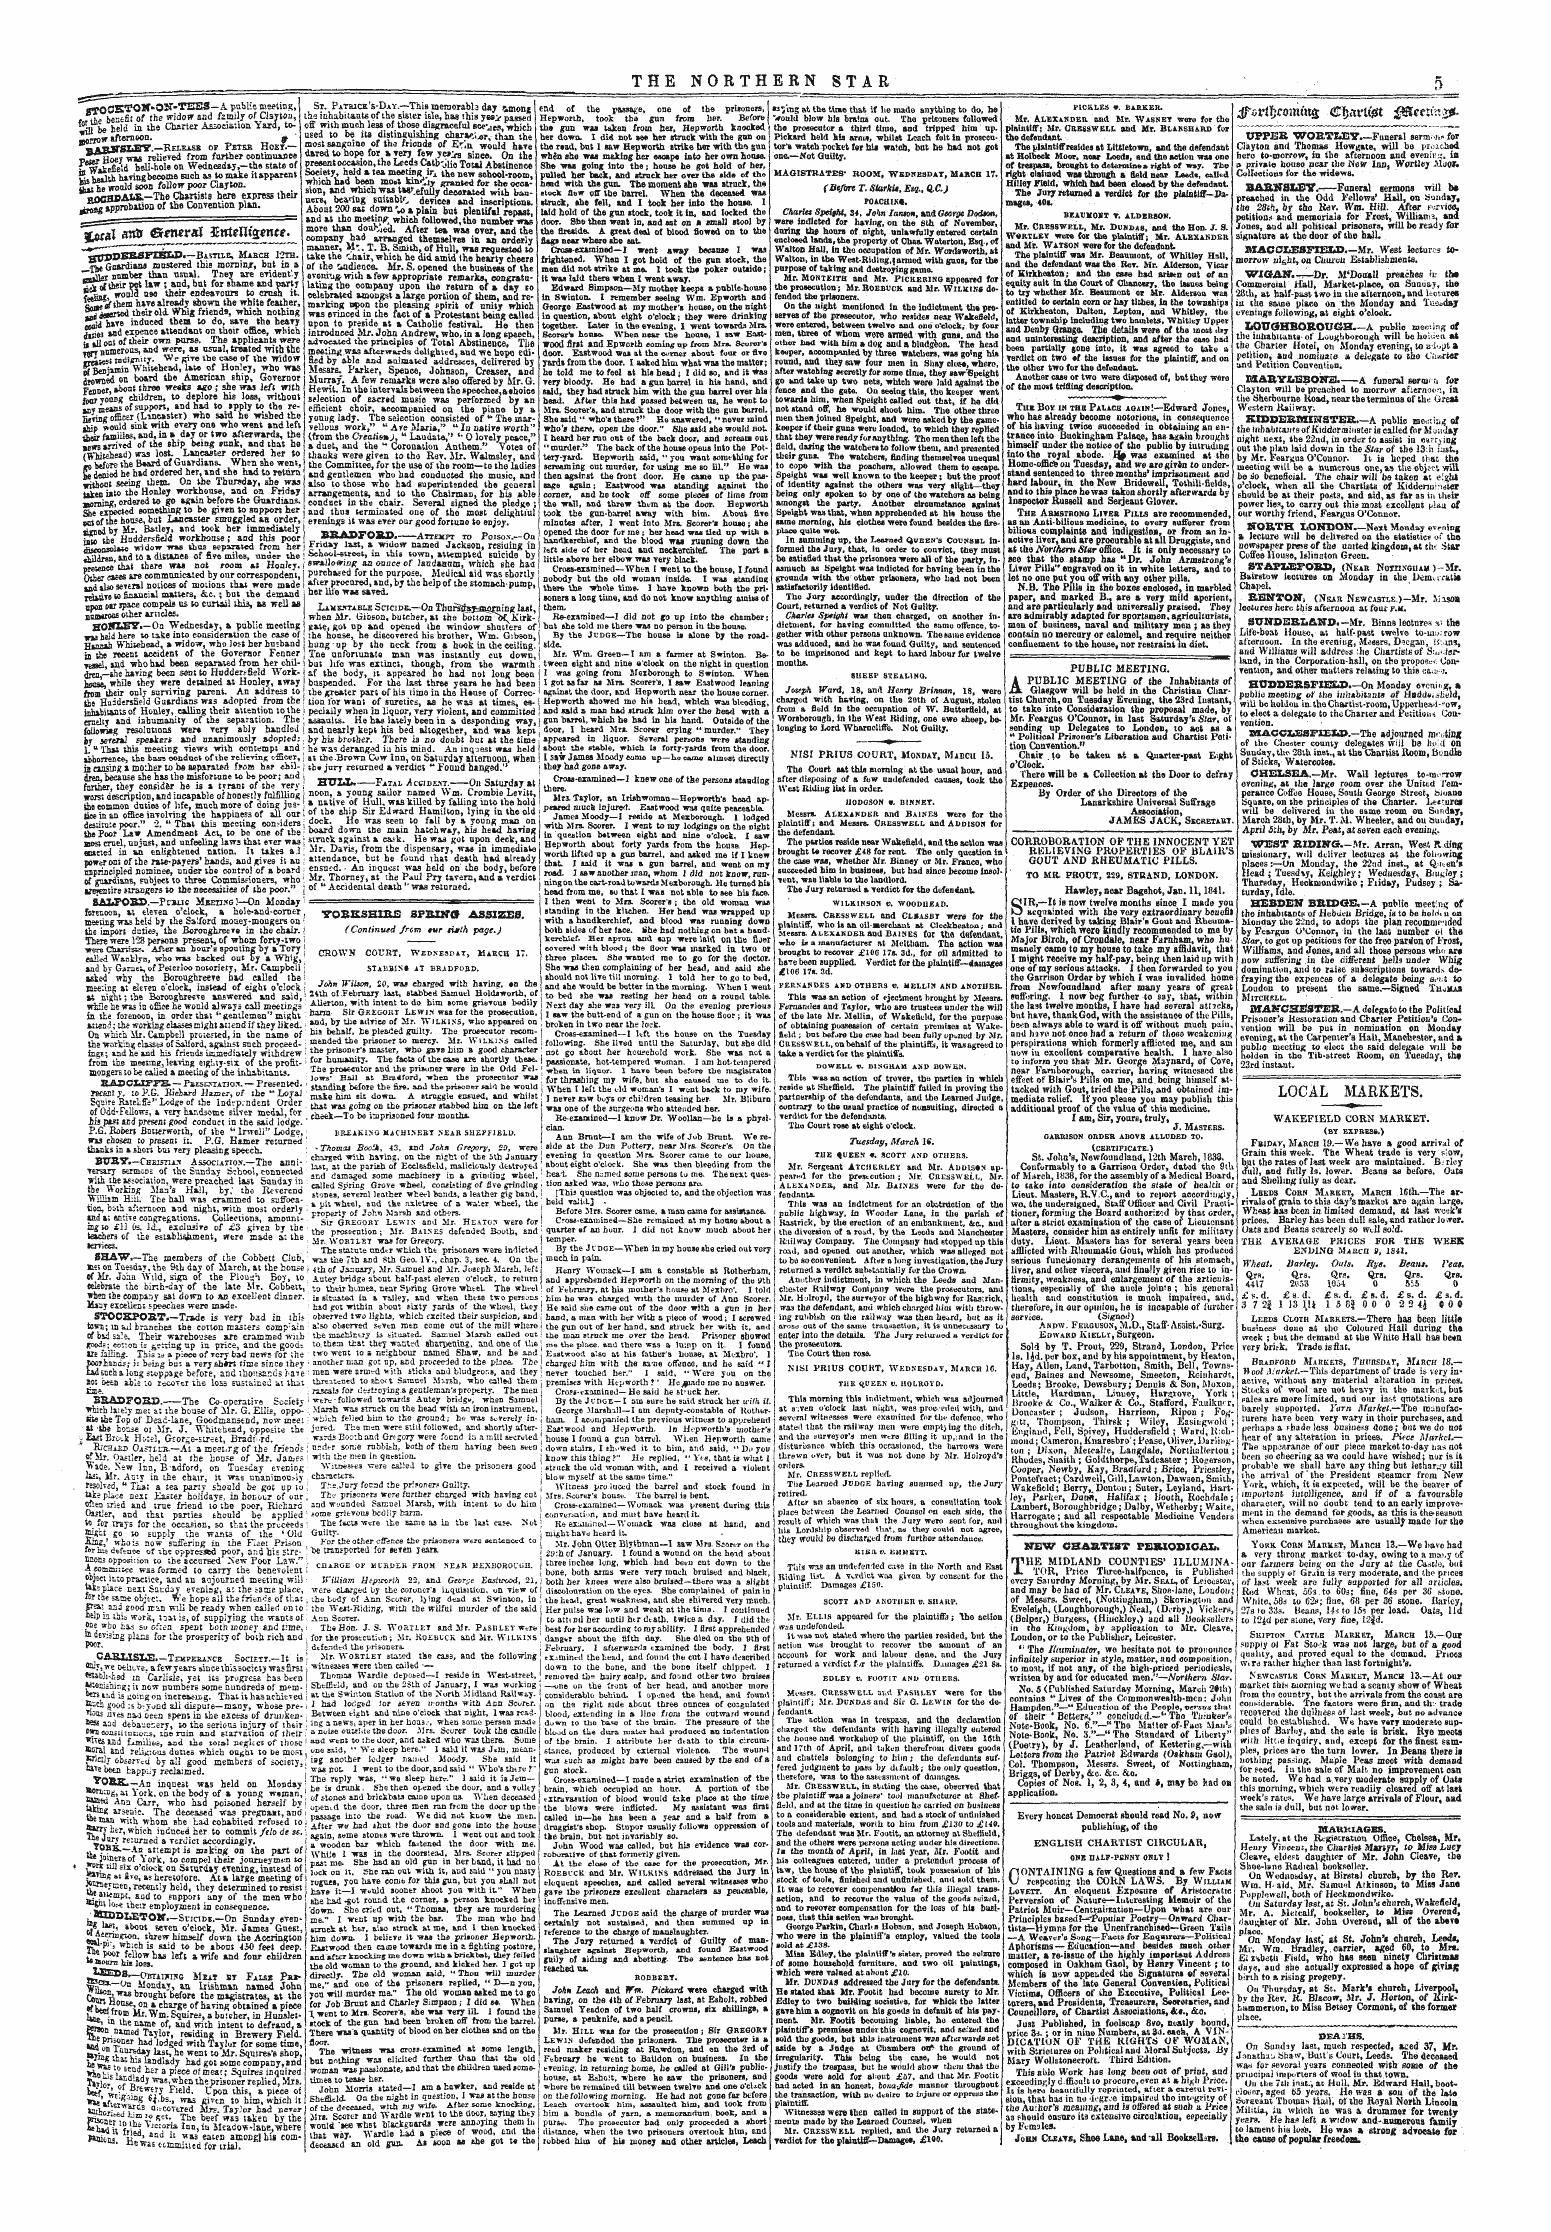 Northern Star (1837-1852): jS F Y, 1st edition - Iorsj An& Fifnwraj £Ntentg*Ntf.